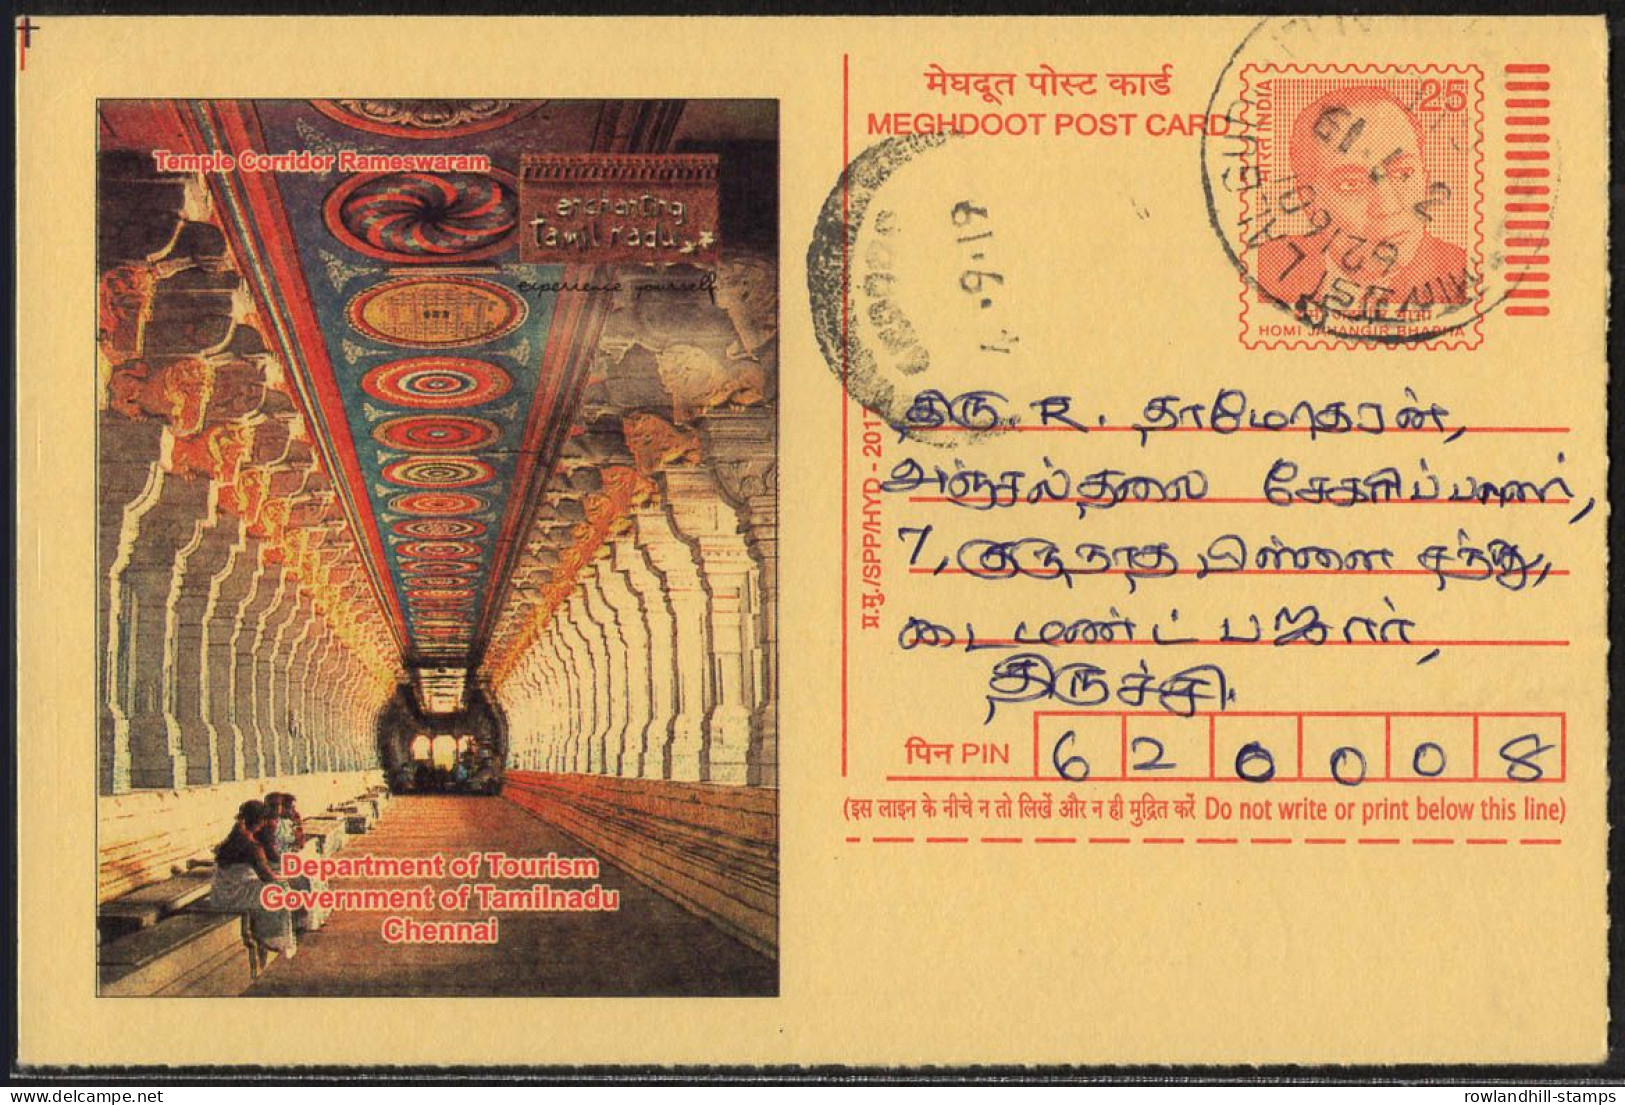 India, 2017, Temple Corridor RAMESWARAM, Meghdoot Post Card, Hinduism, Tourism, Tamilnadu, Architecture, Religion, A23 - Hindouisme